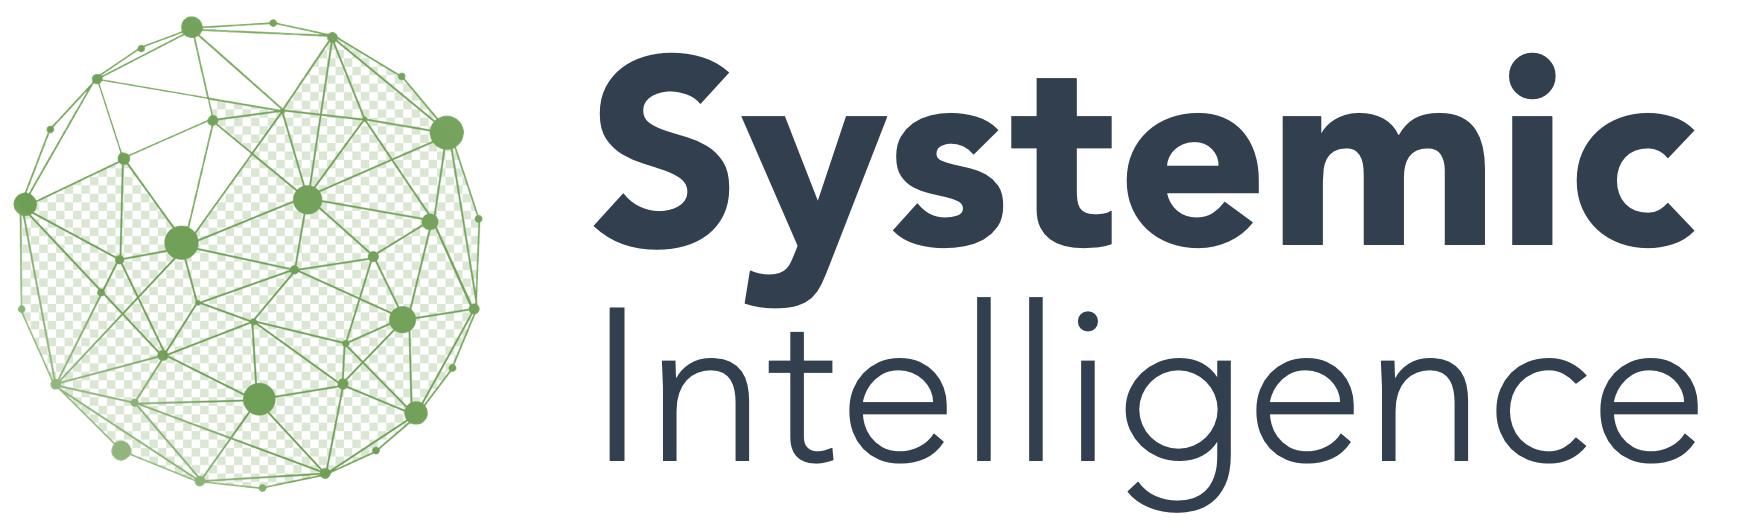 Systemic Intelligence